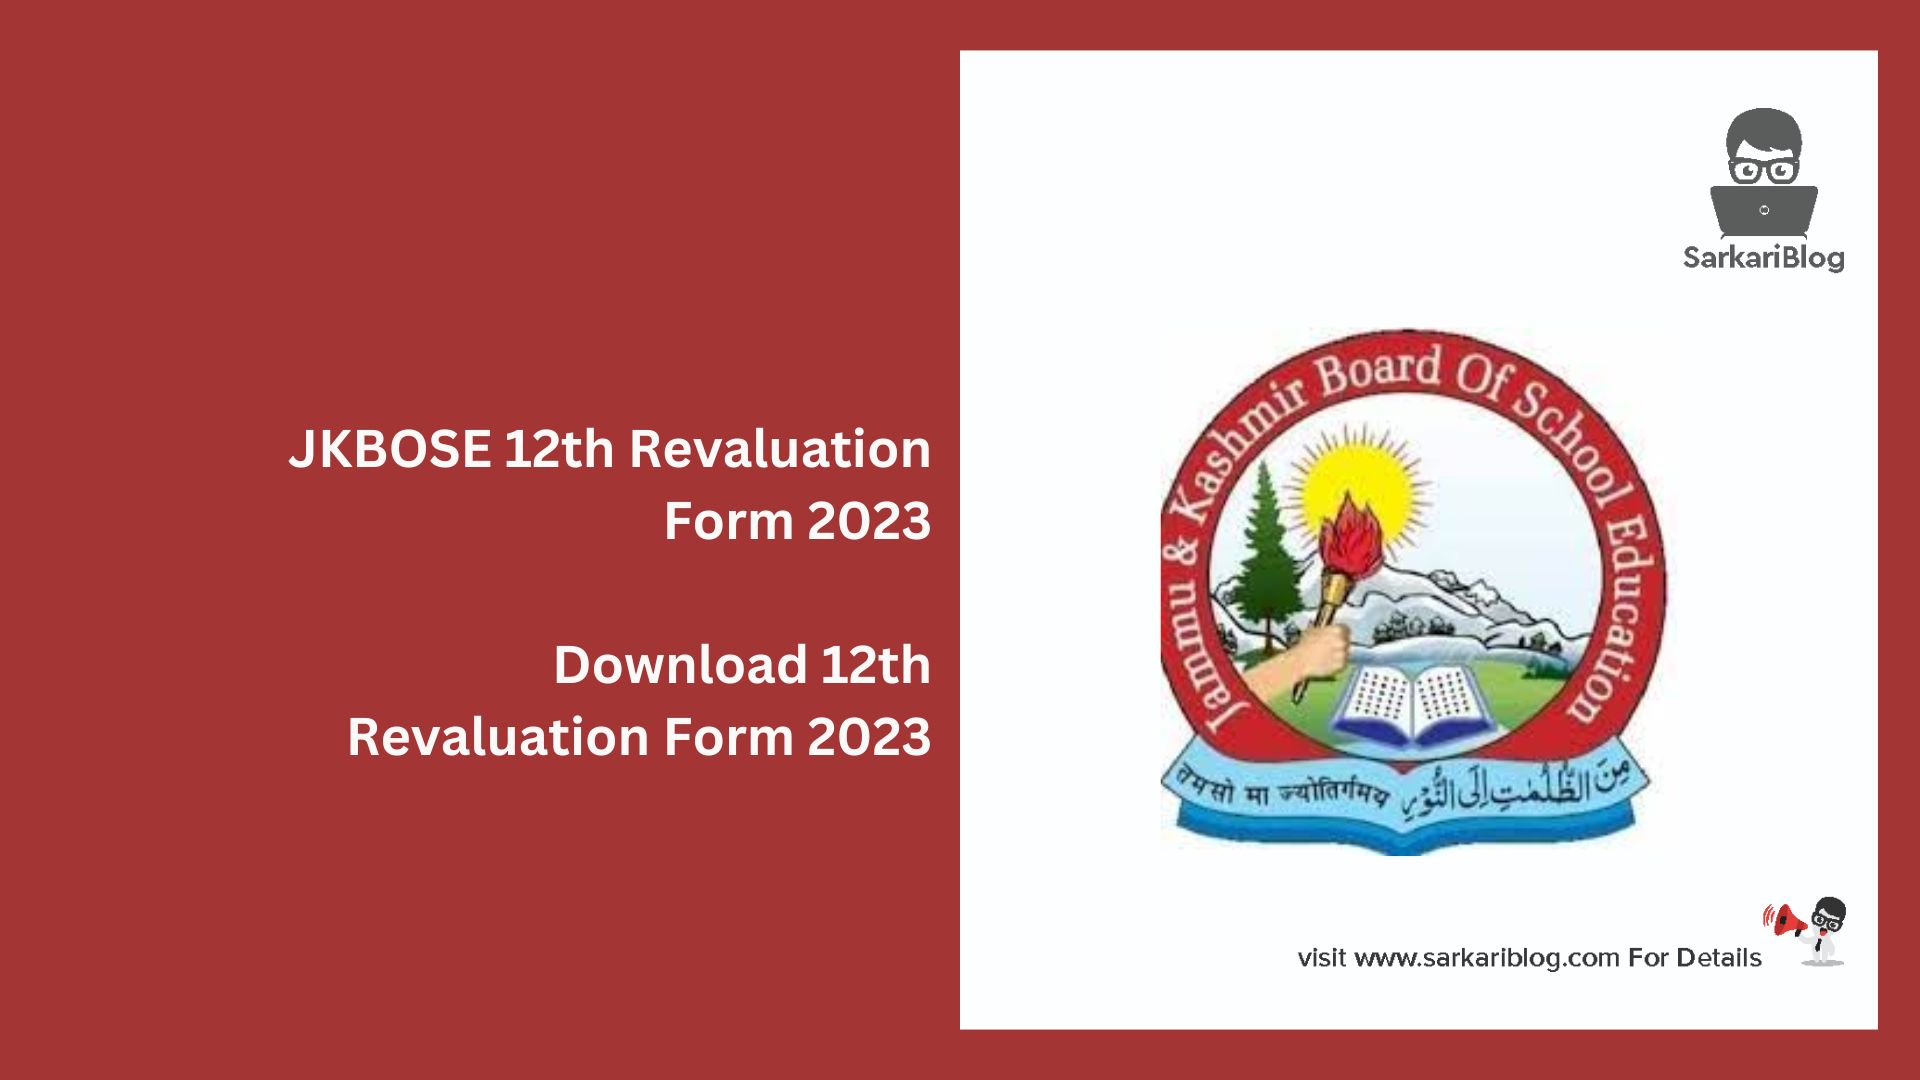 JKBOSE 12th Revaluation Form 2023